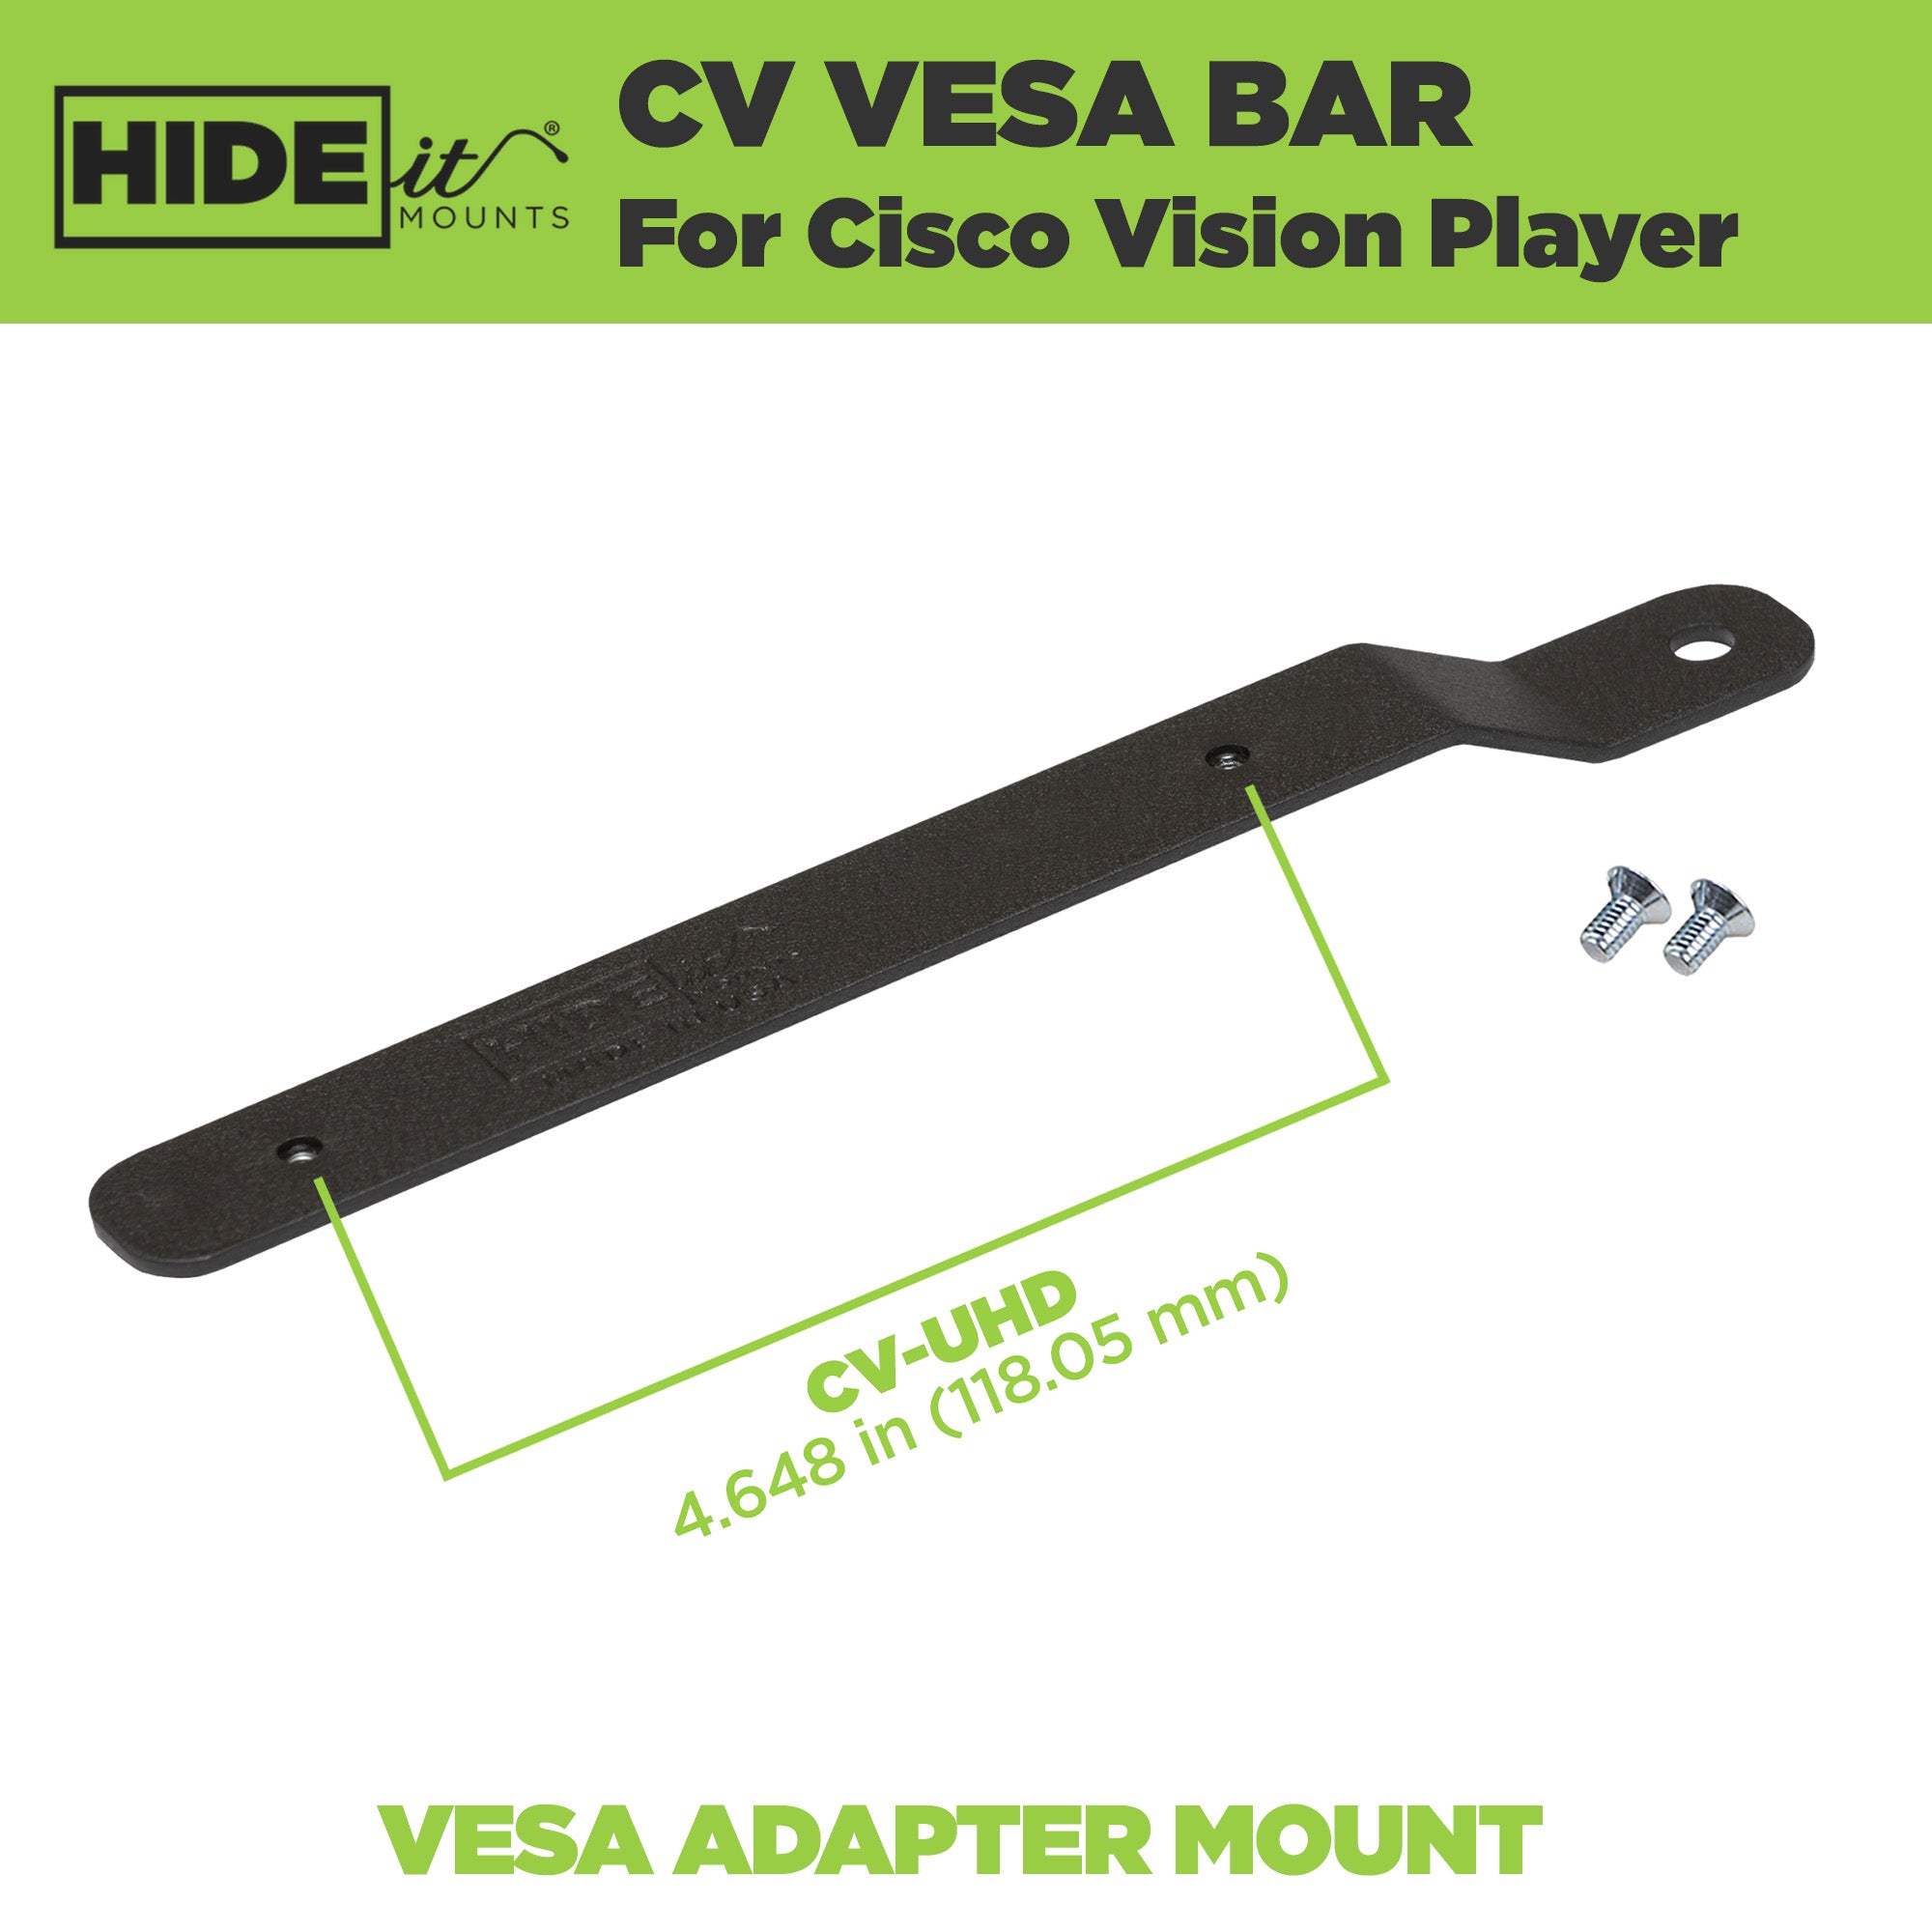 HIDEit Mounts VESA Mount Adapter Bar for Cisco Vision CV-UHD media player.